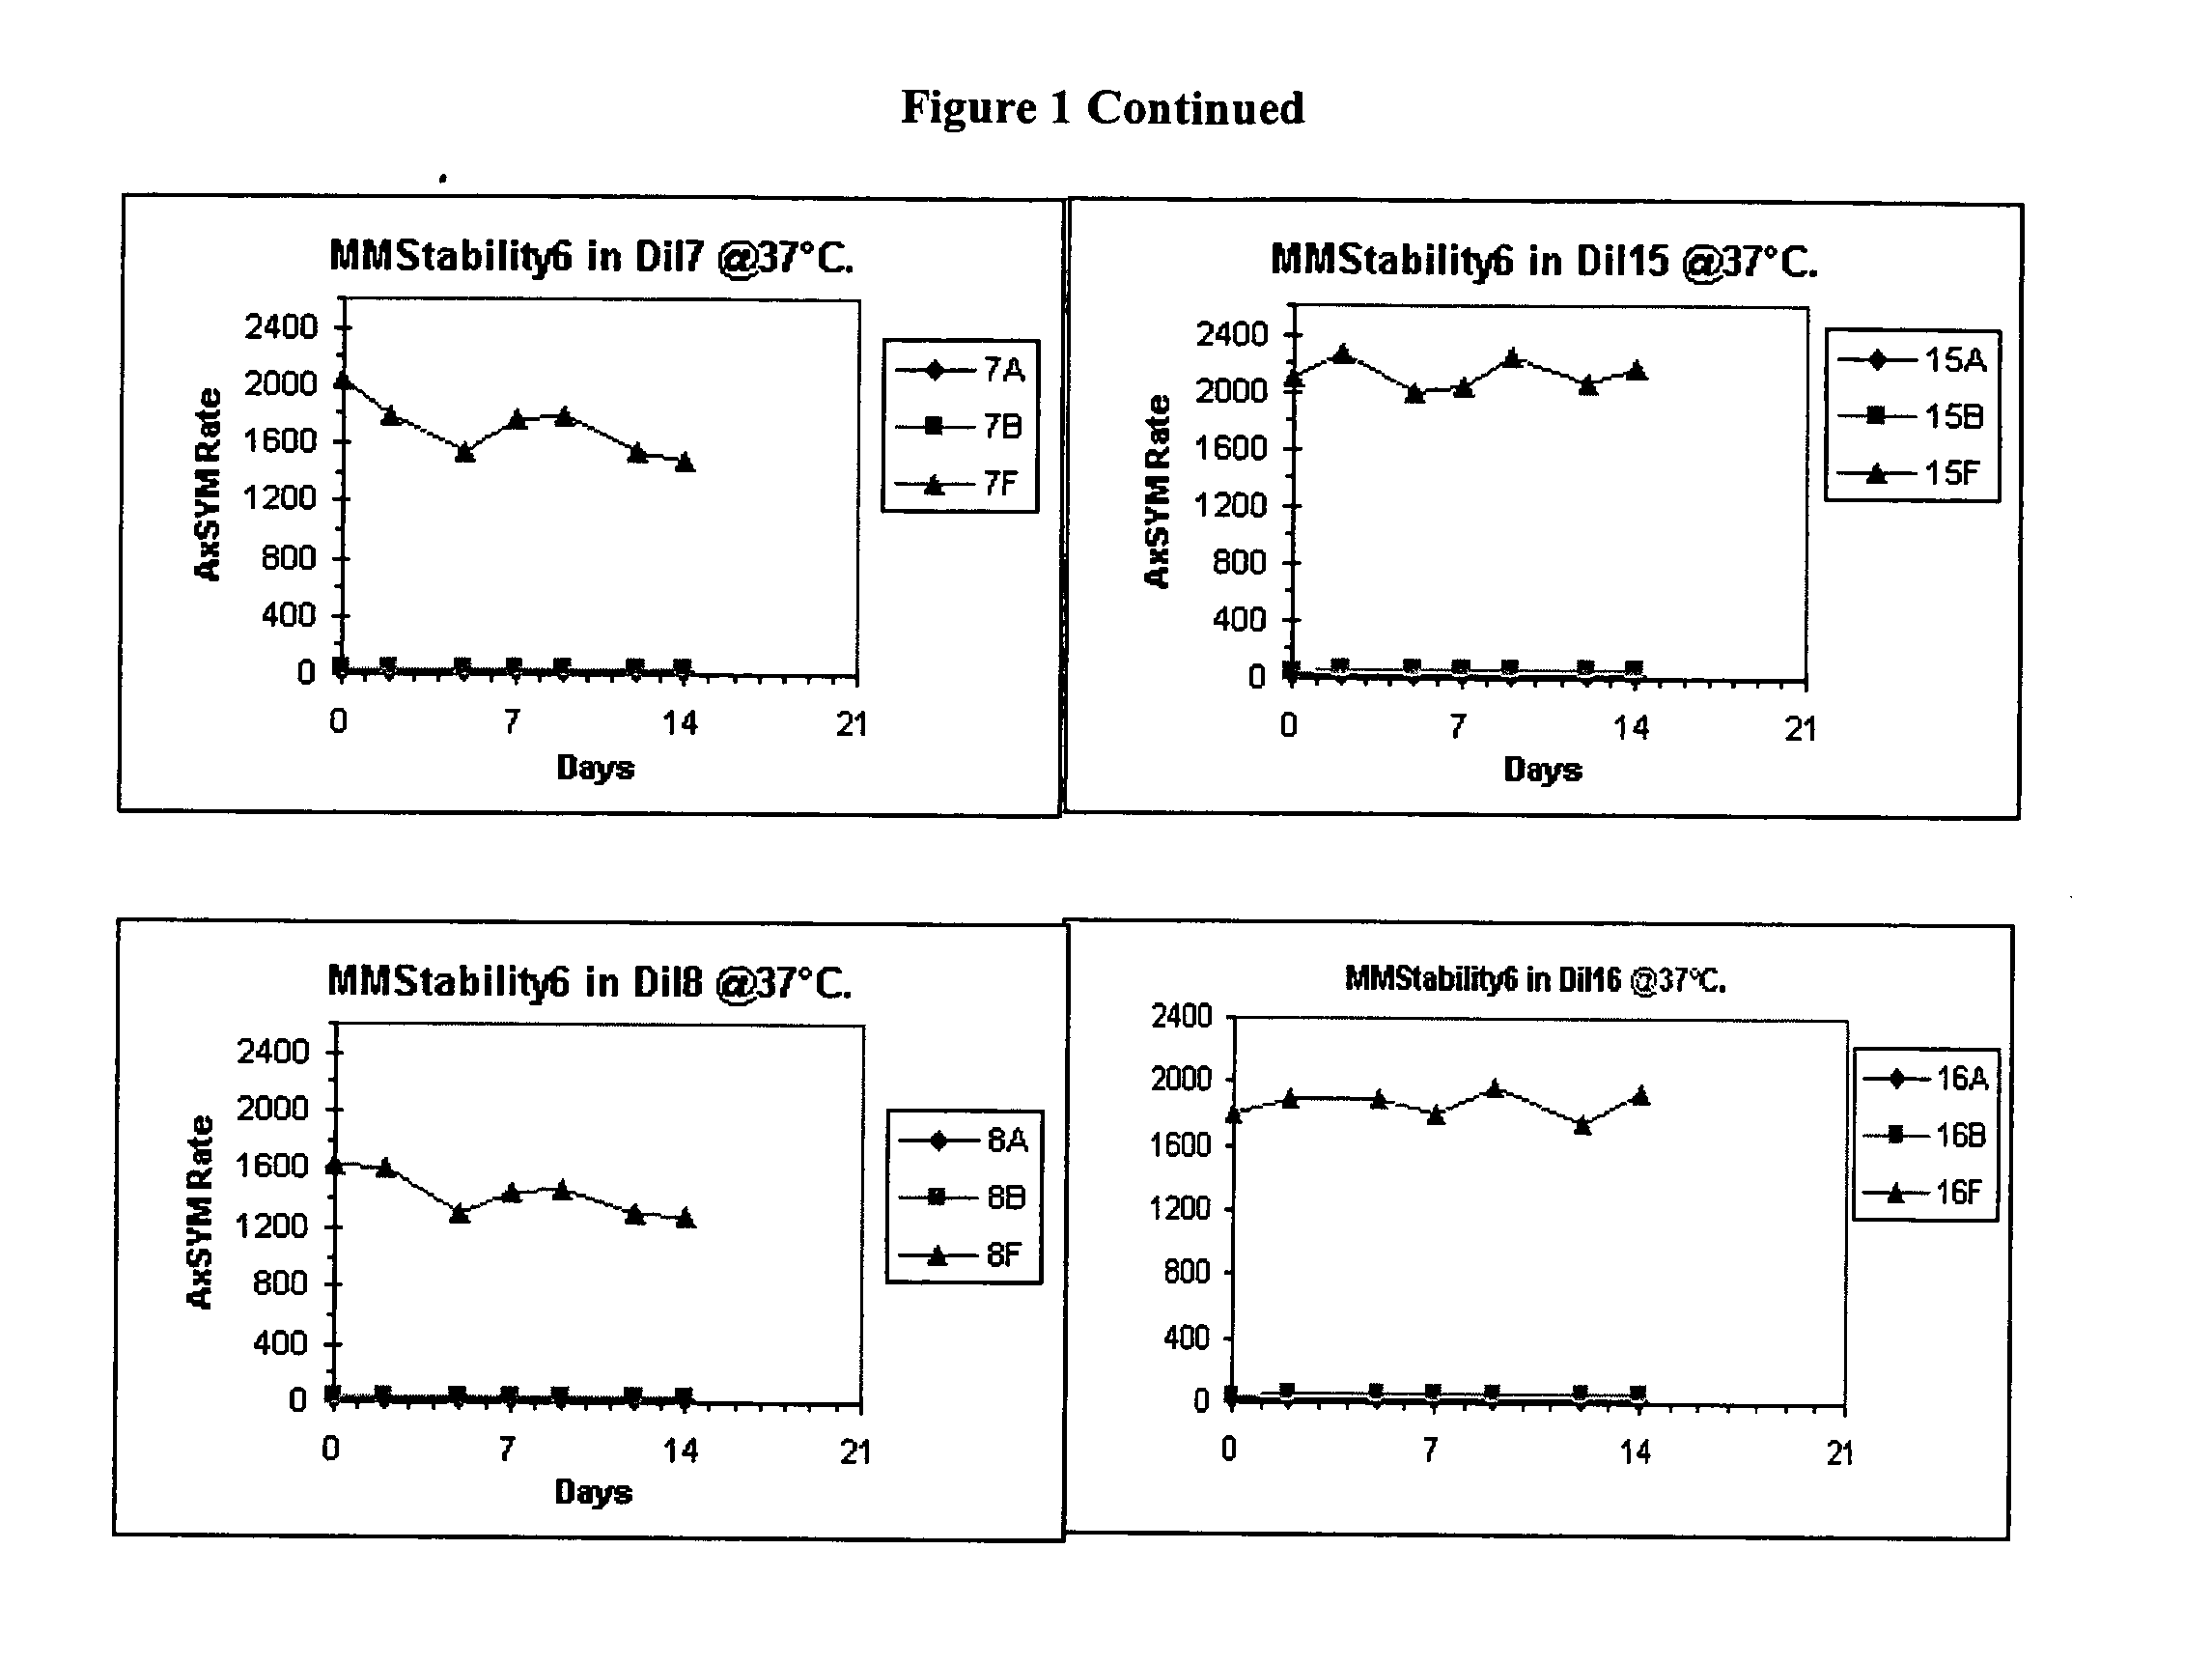 Stable calibrators or controls for measuring human natriuretic peptides